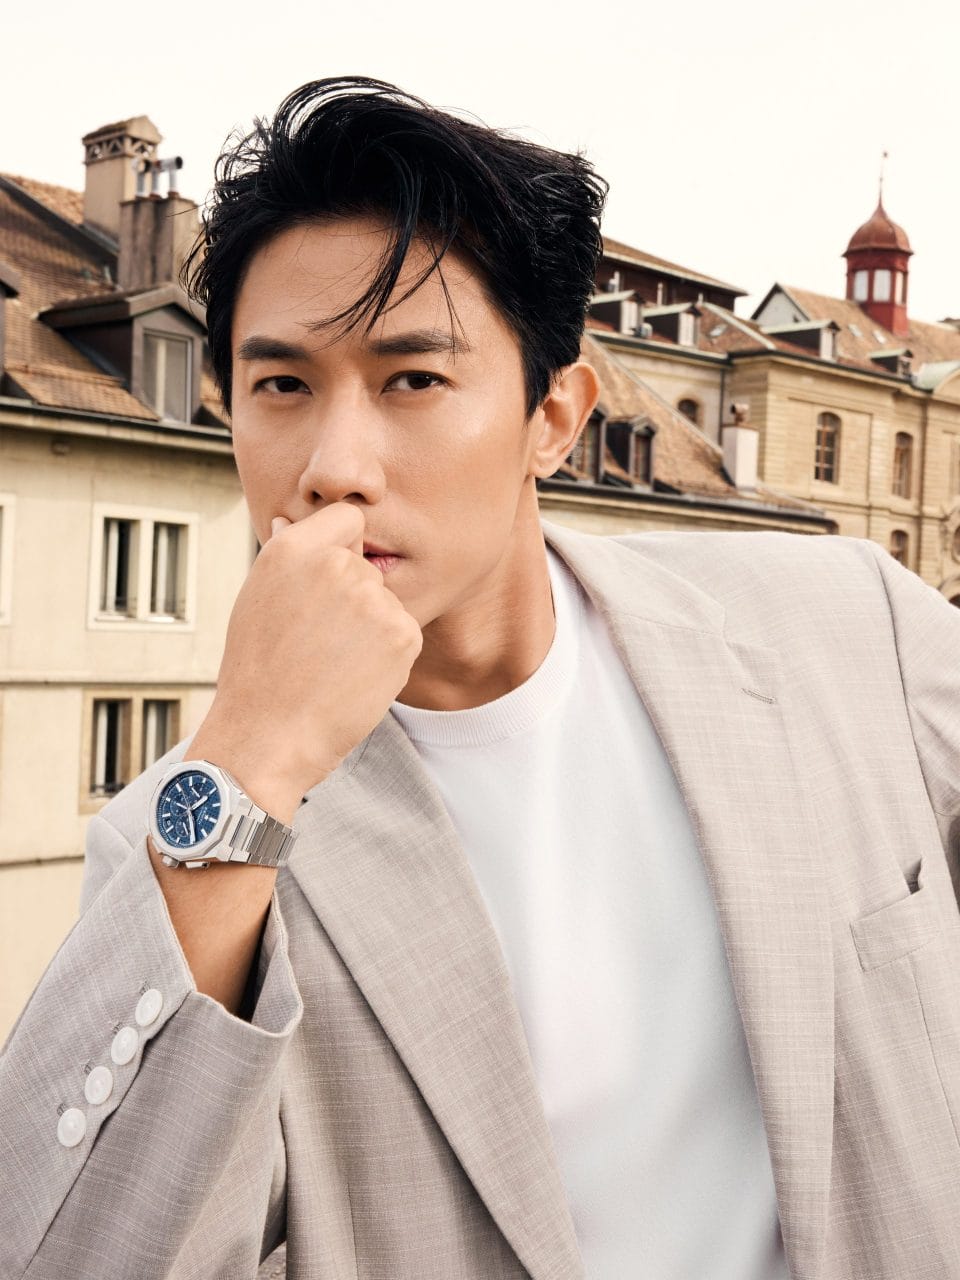 Zenith Friend of Brand, Desmond Tan, Shares His Watches & Wonders Experience in Geneva